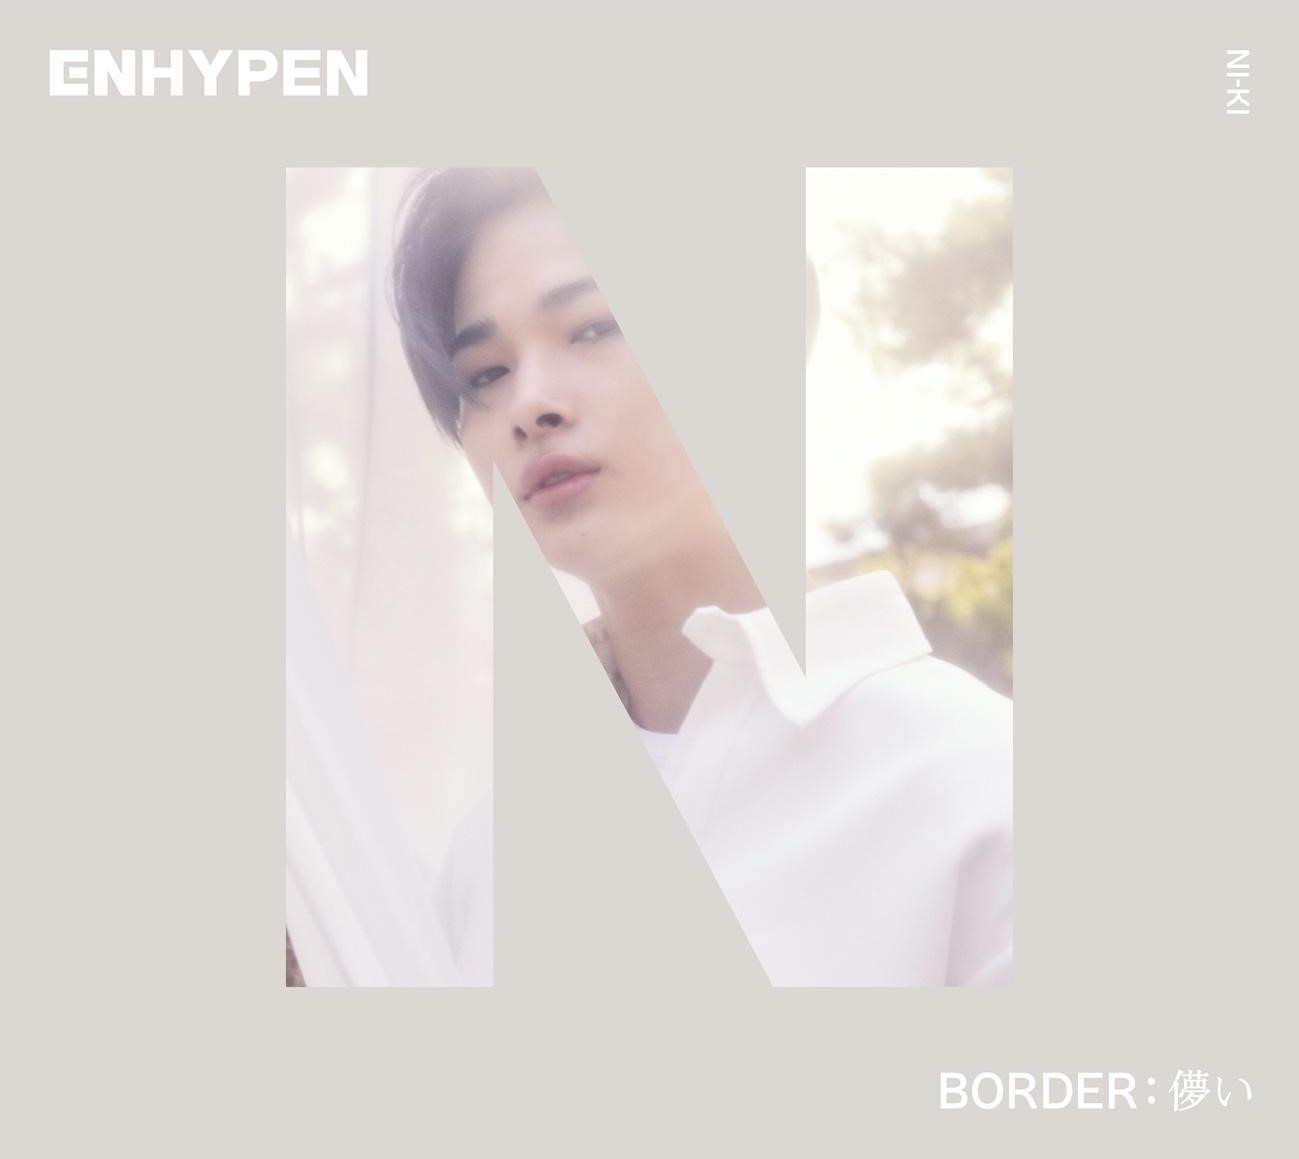 ENHYPEN BORDER:儚い ヒスン ソロジャケ トレカ | hartwellspremium.com